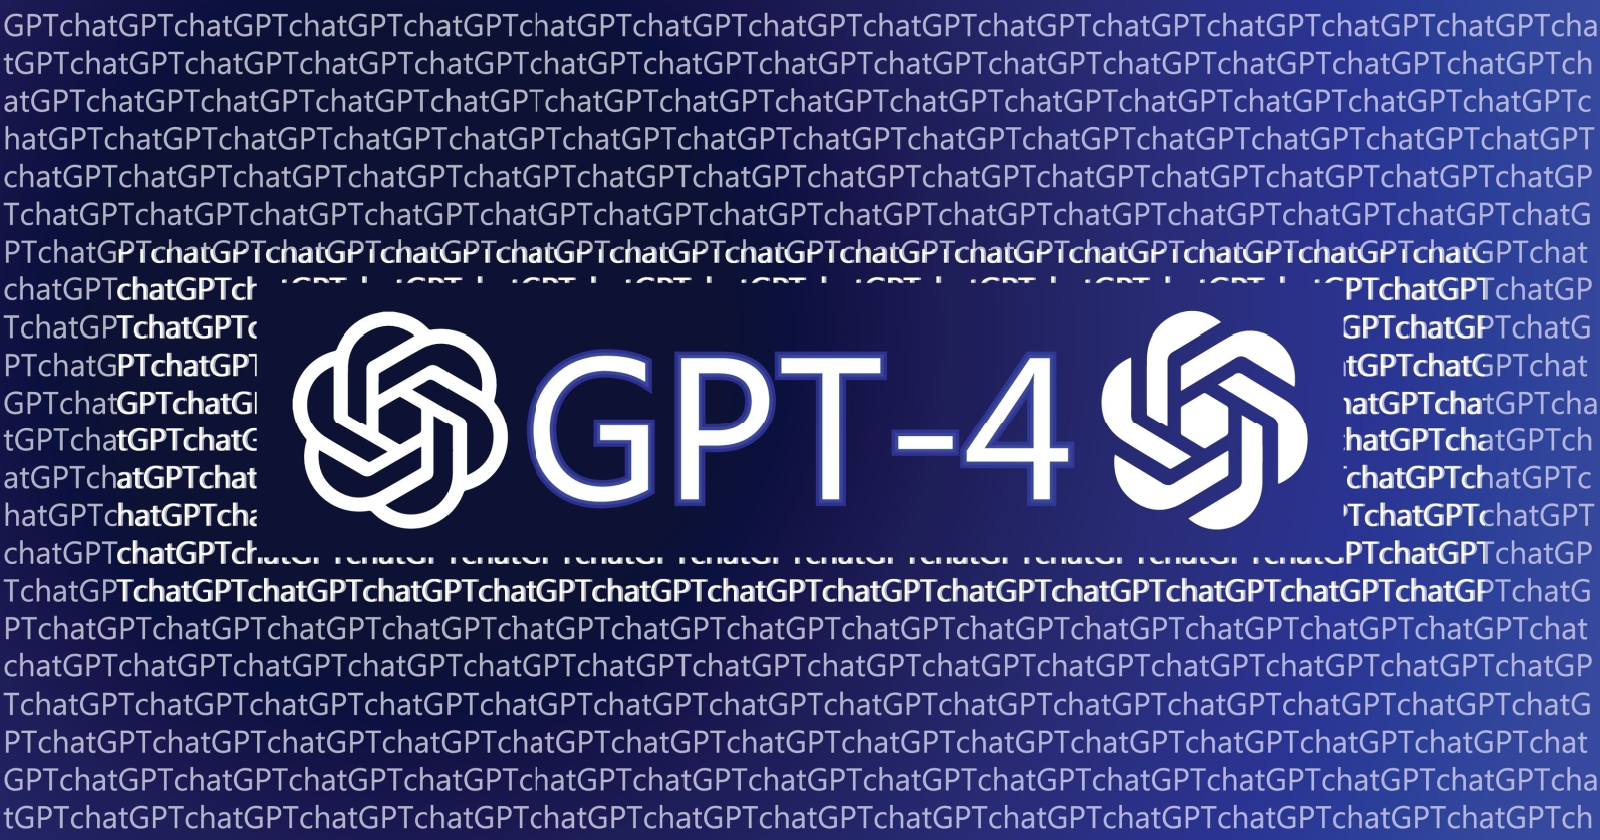 ChatGPT GPT 4